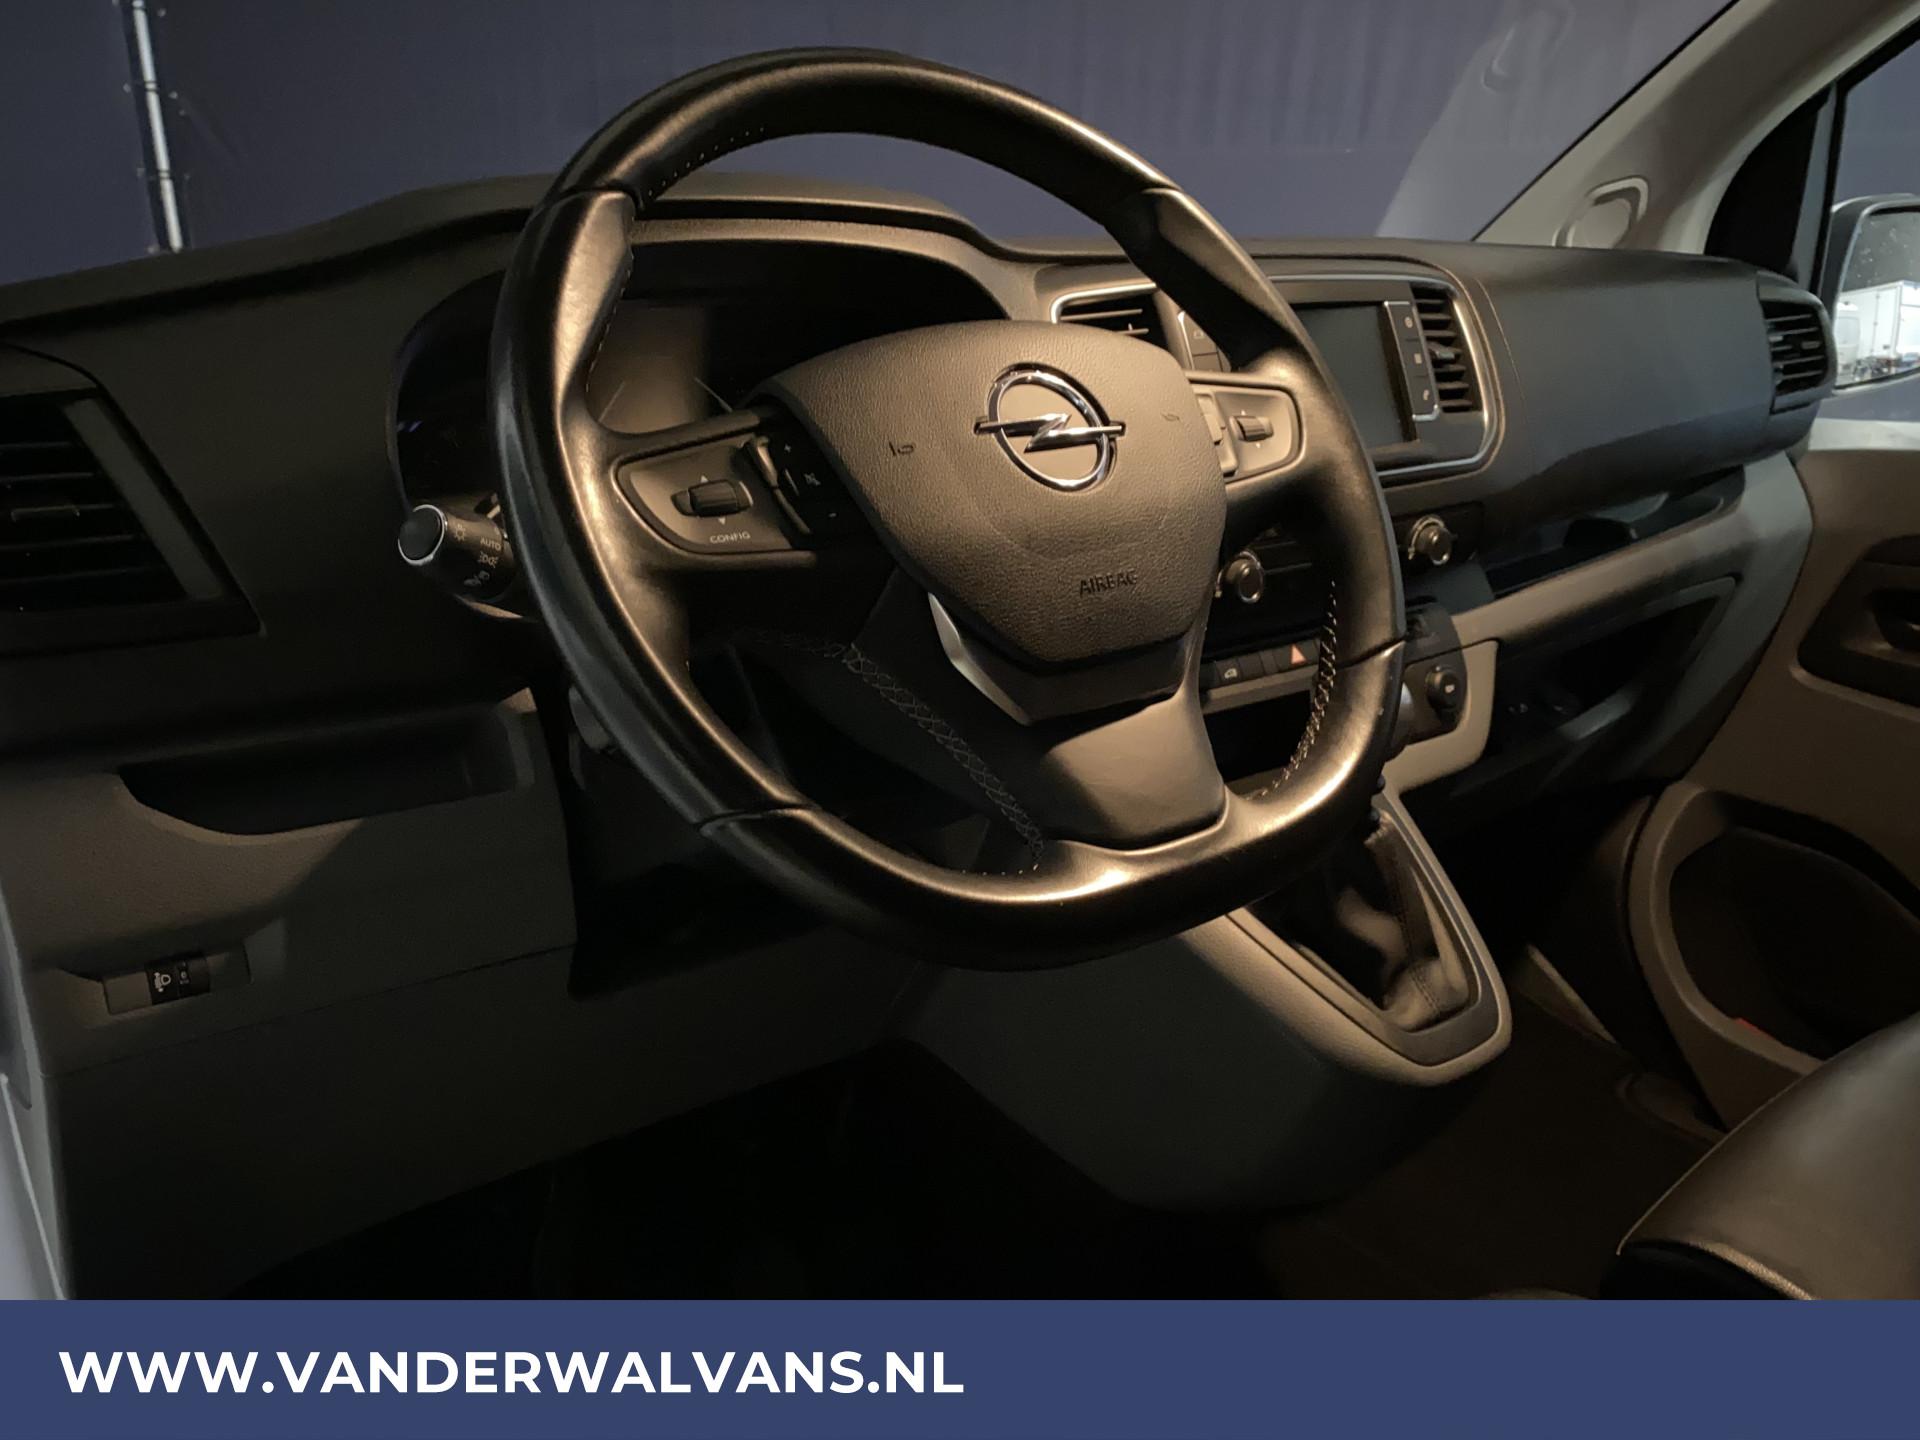 Foto 16 van Opel Vivaro 2.0 CDTI 120pk L2H1 Euro6 Airco | Bumpers in kleur | Navigatie | 2500kg trekhaak